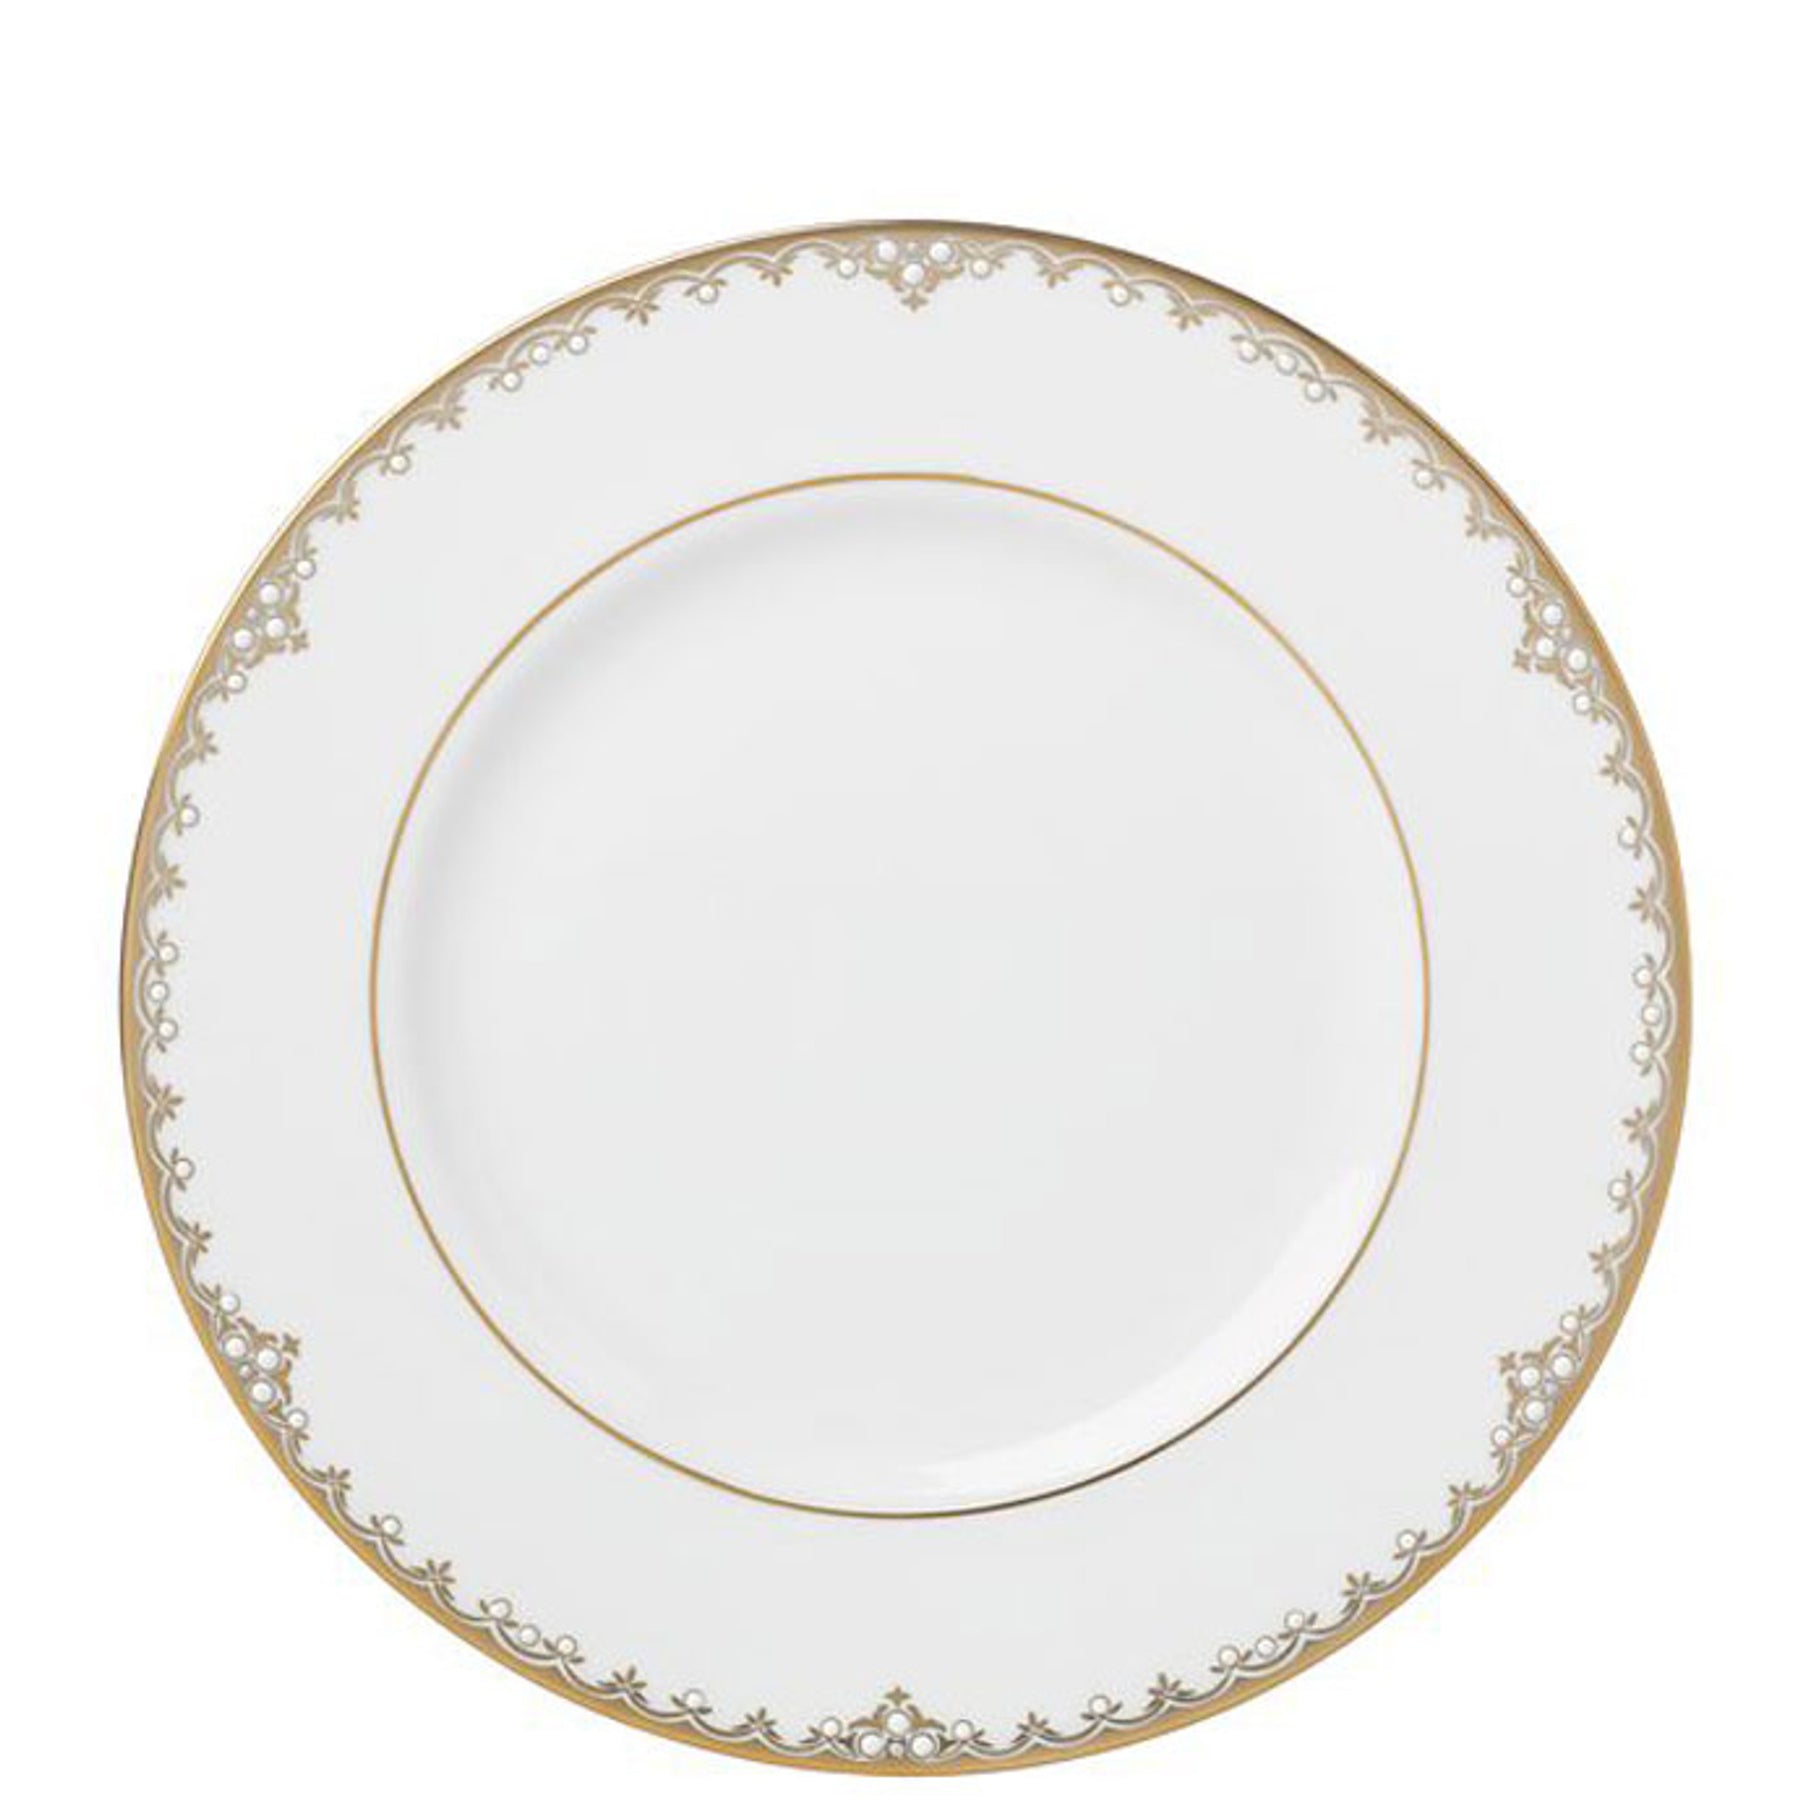 Lenox Federal Dinnerware - Gold Rim, Assorted Style Plates